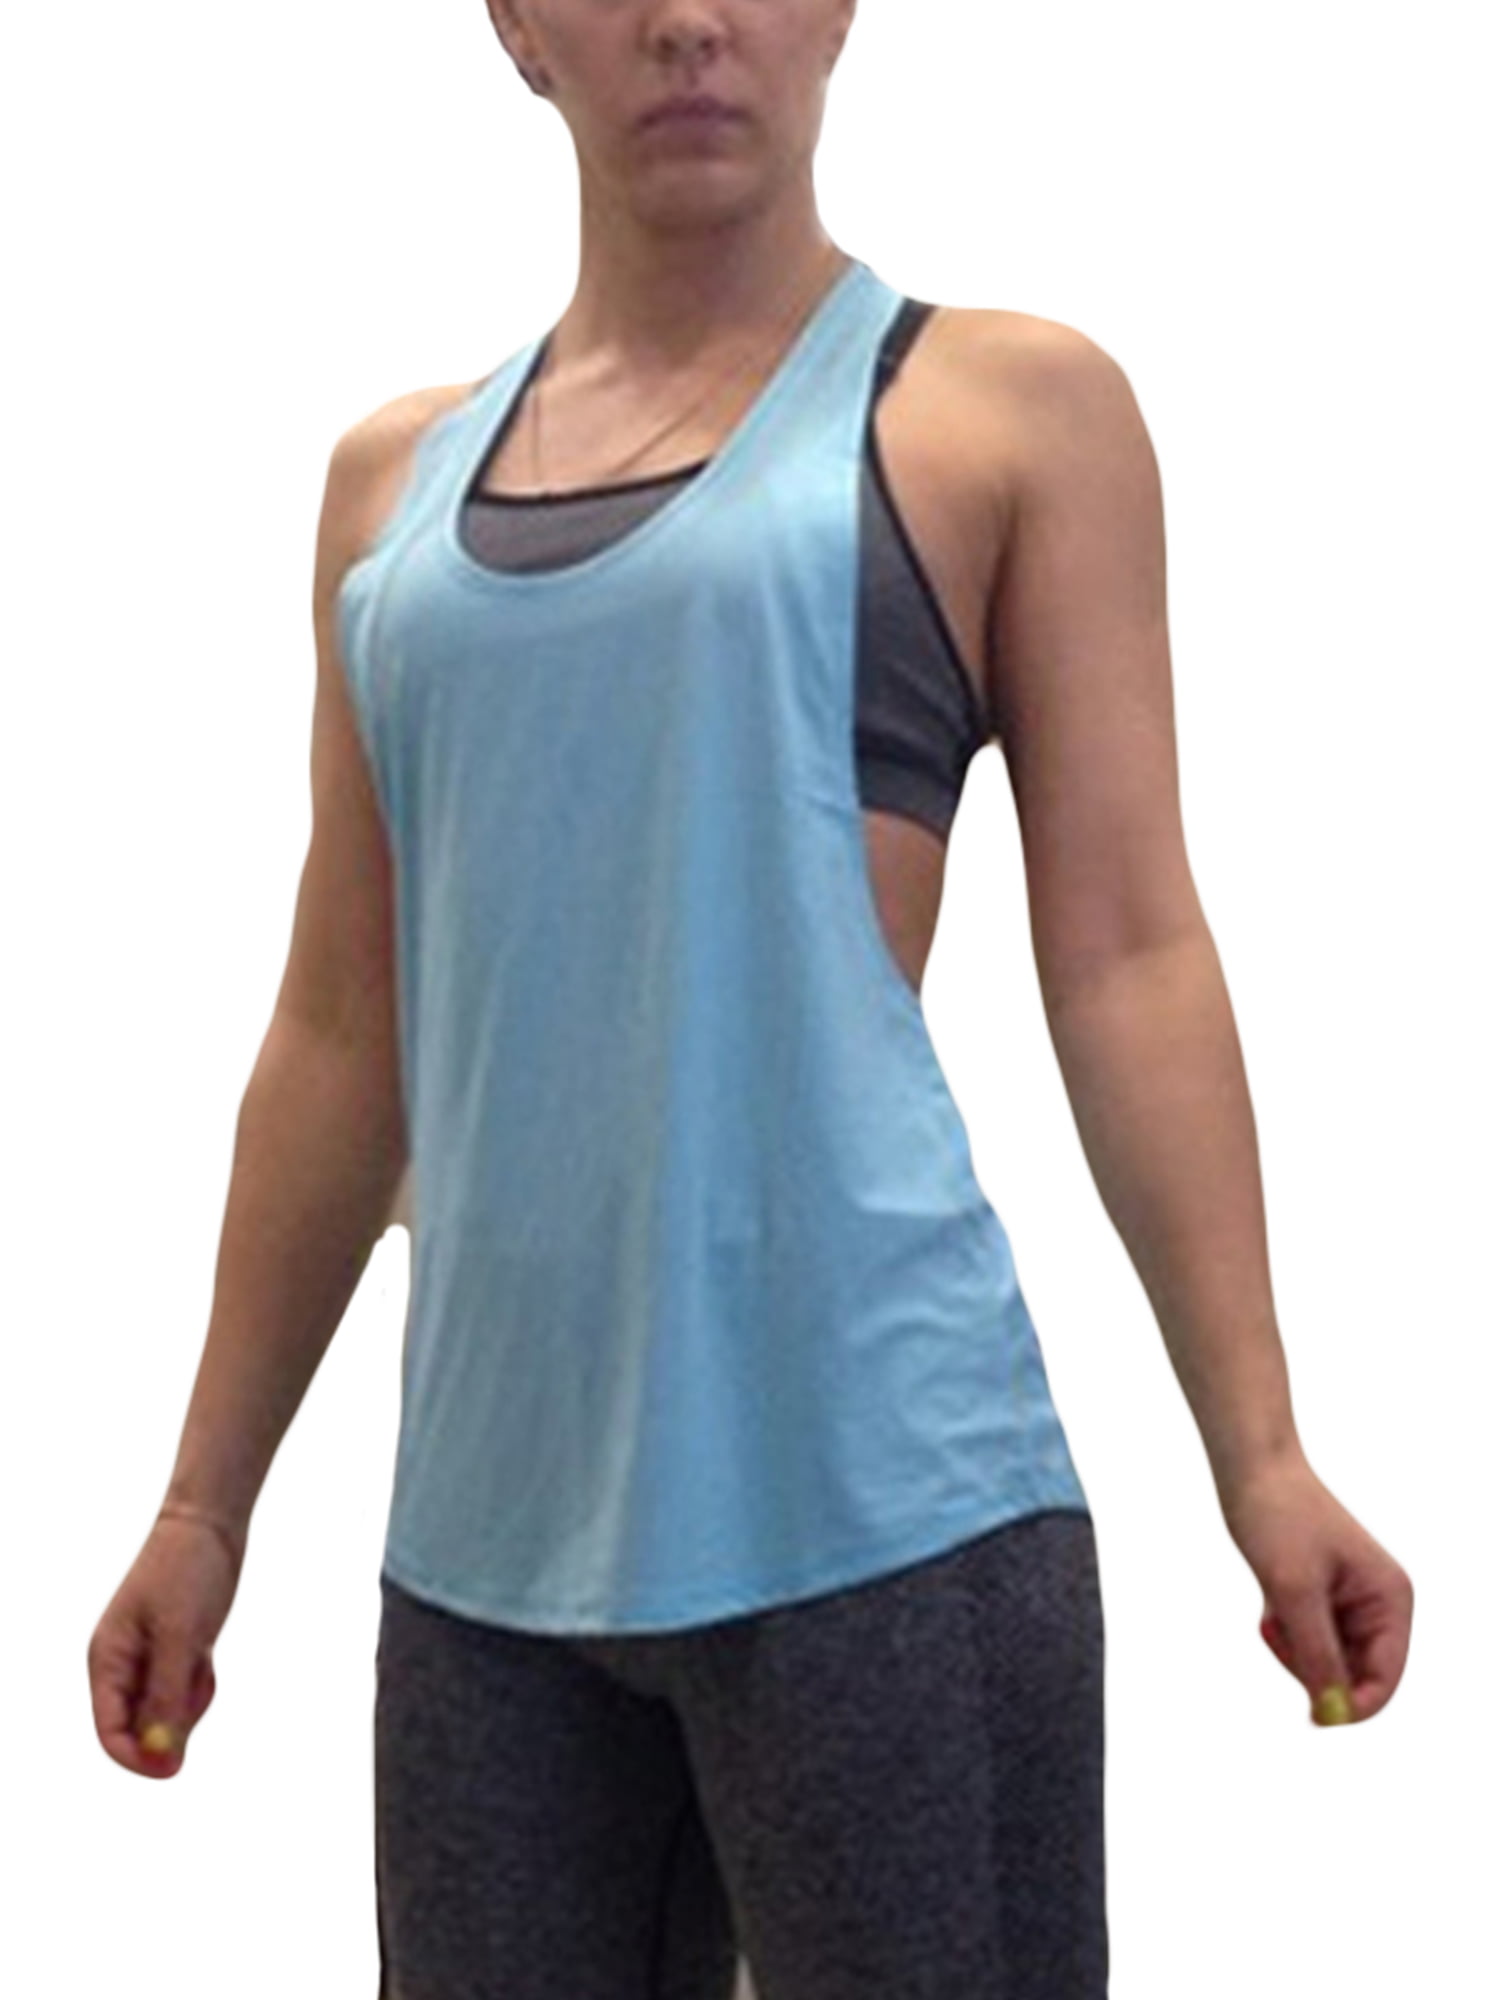 Roadbox Womens Workout Sleeveless Shirts Running Tank Tops Athletic Yoga Tops 